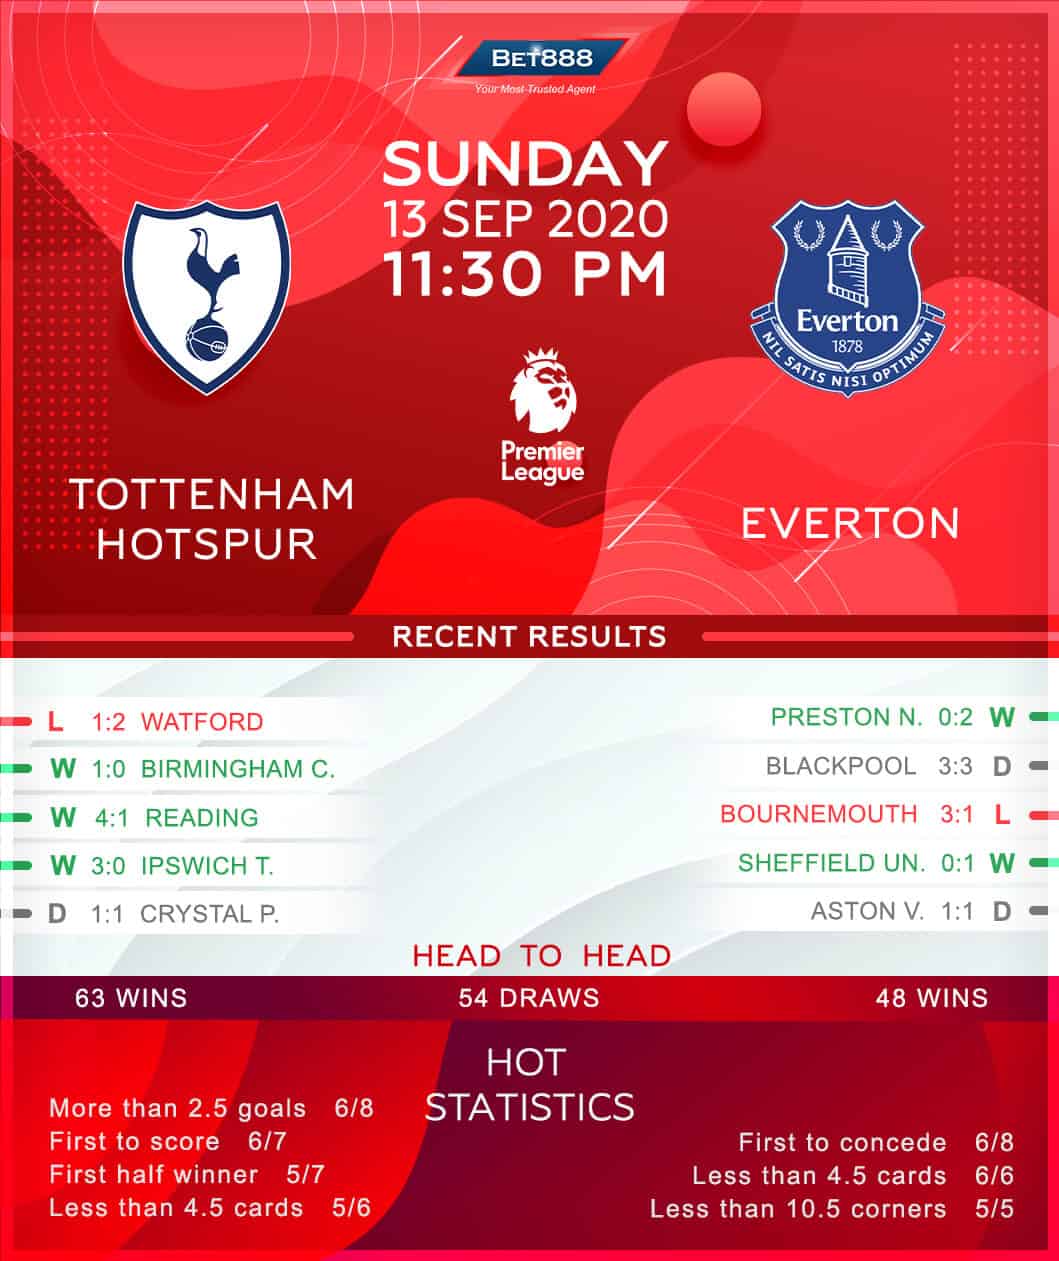 Tottenham Hotspur vs Everton 13/09/20